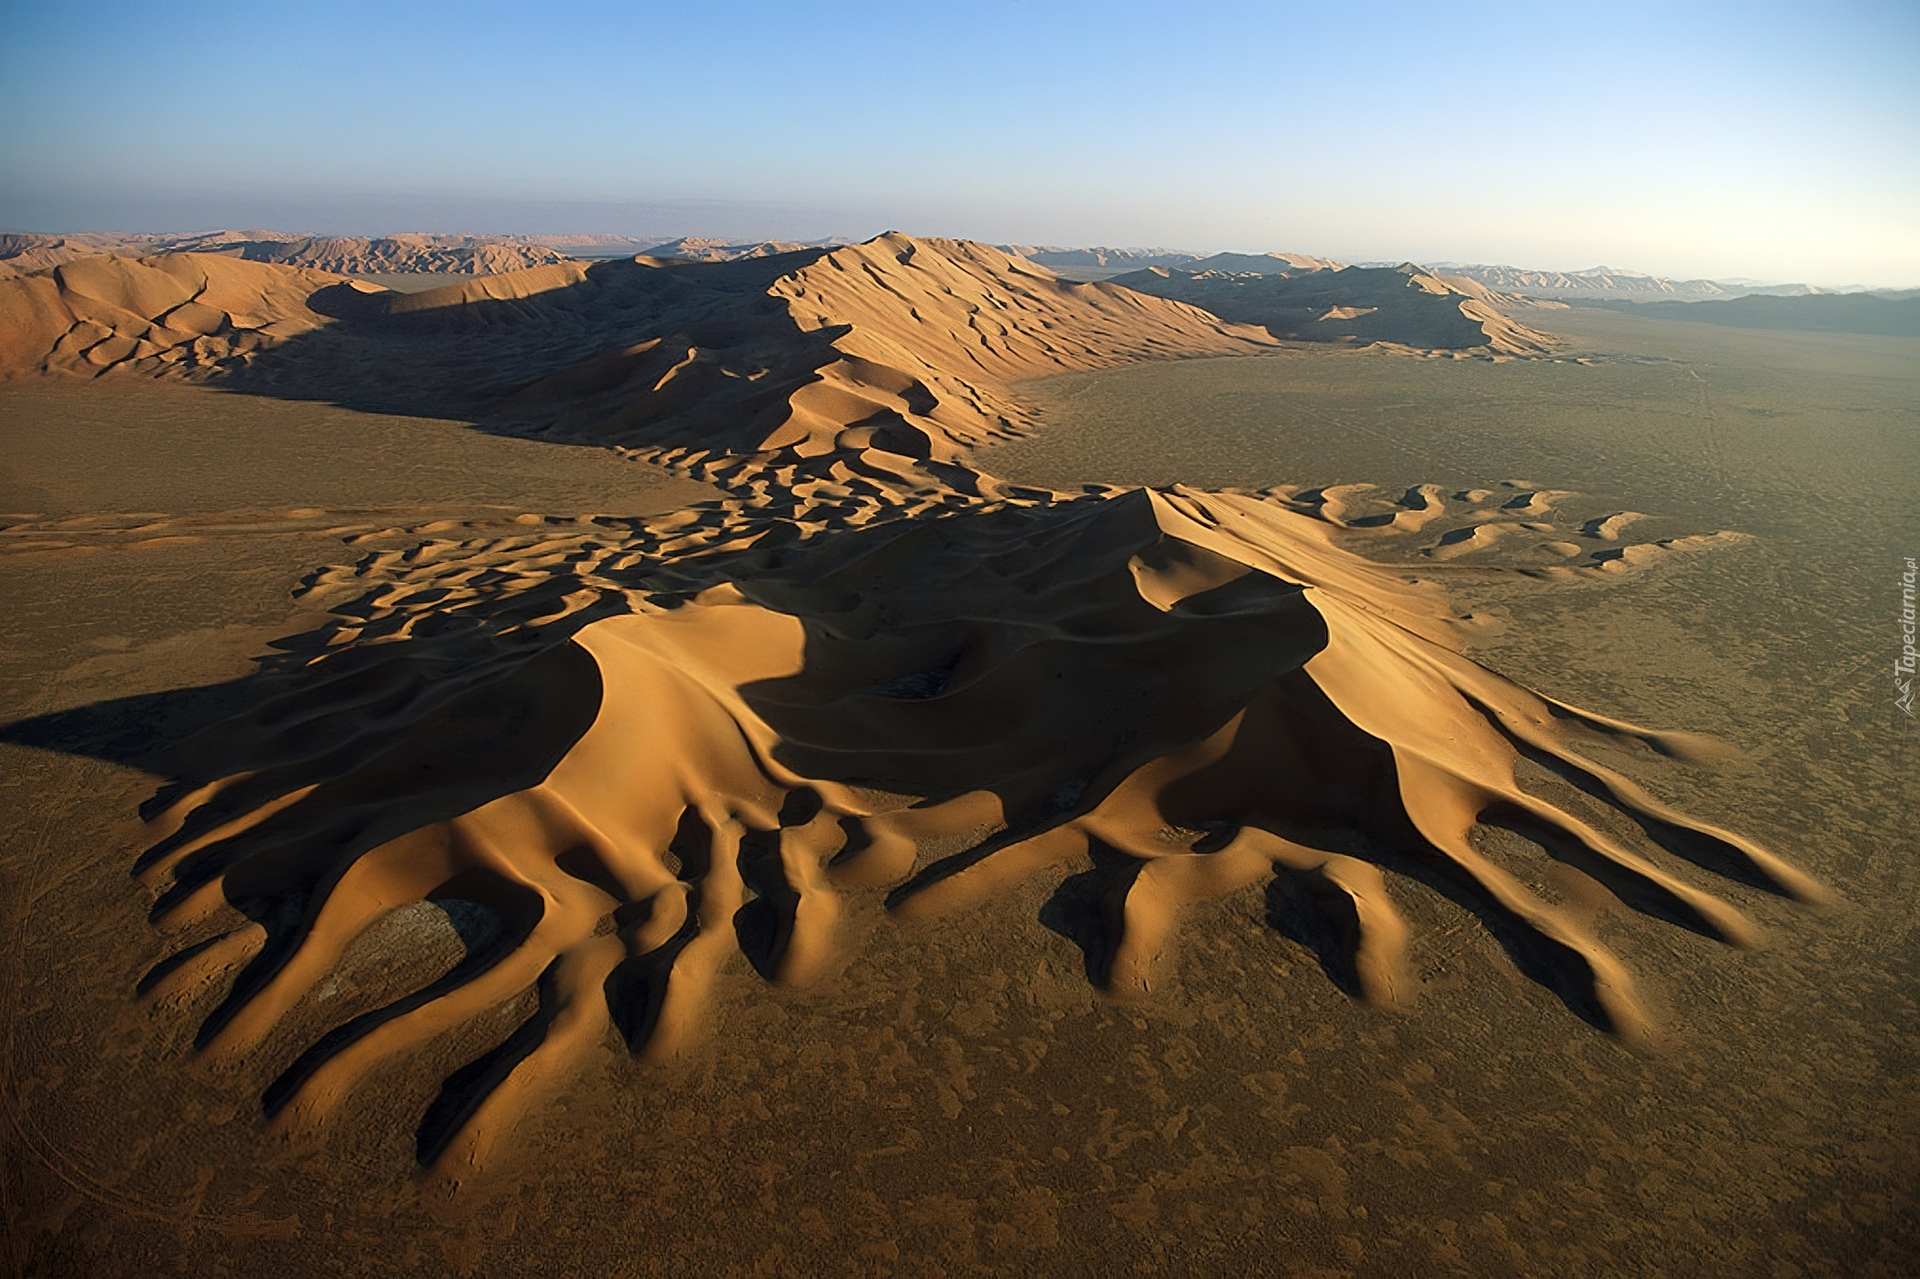 Планета земля пустыня. Барханы Оазис Саудовская Аравия. Пустыня руб-Эль-Хали. Дюны руб-Эль-Хали. Песчаные дюны, руб-Эль Хали..